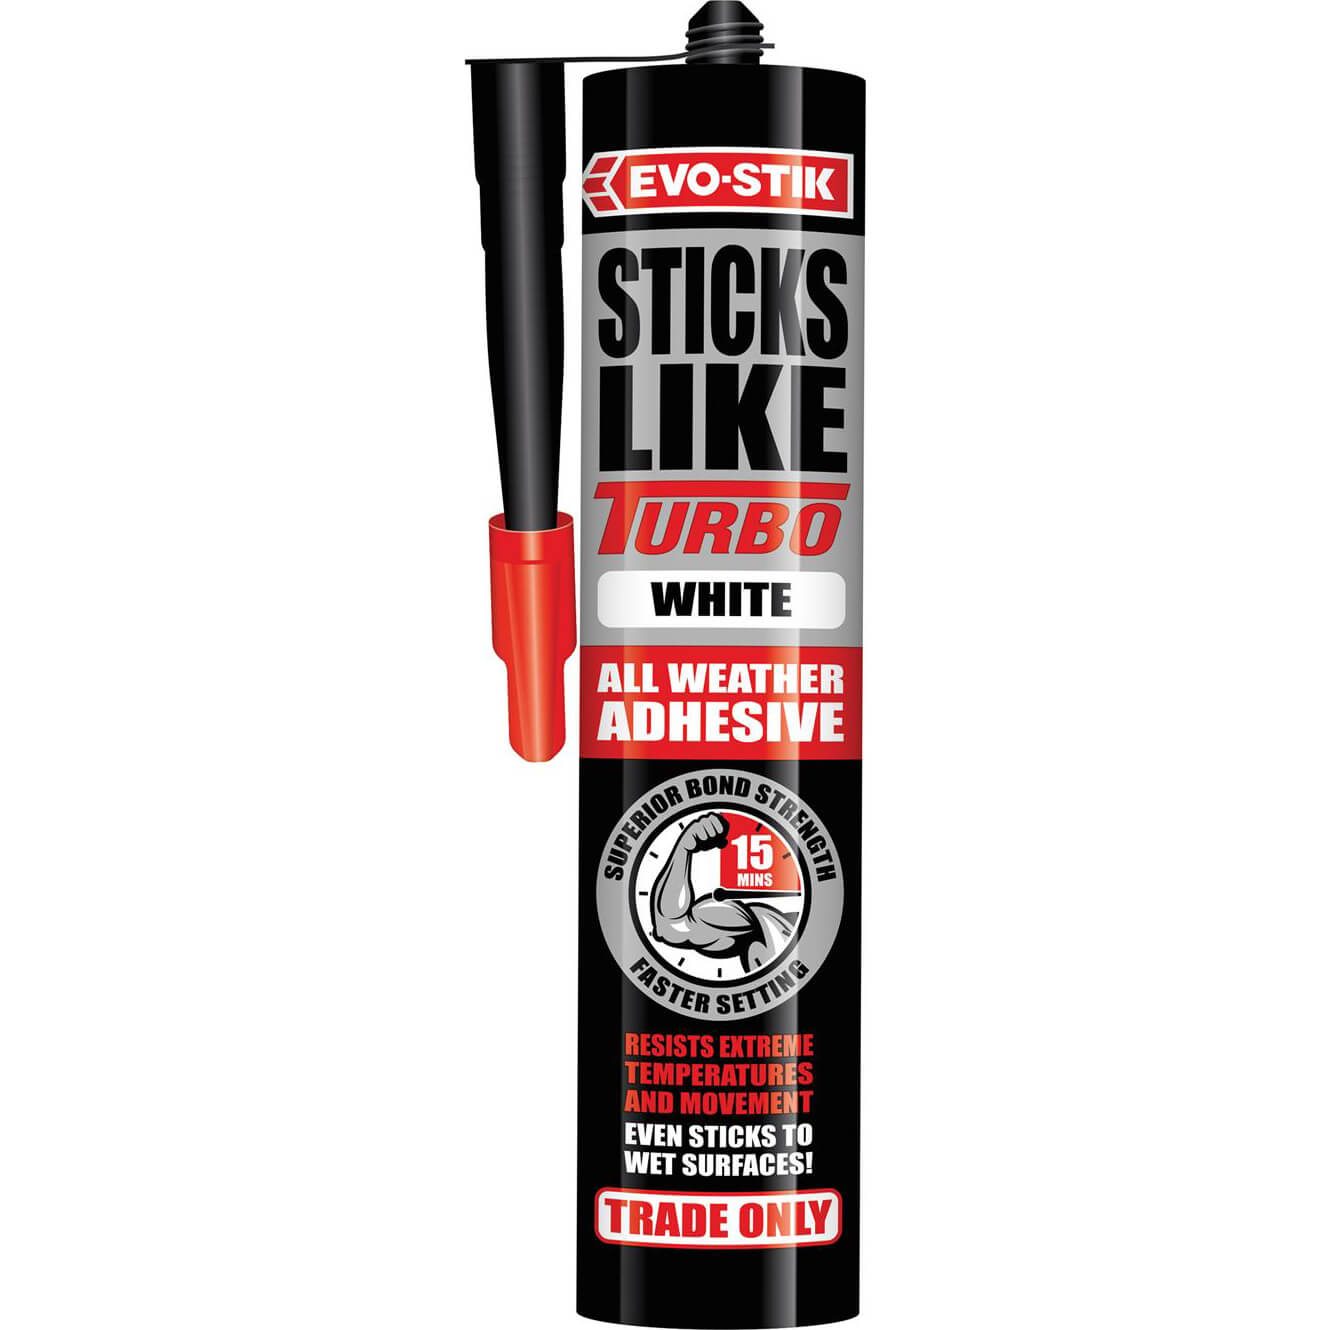 Image of Evo-Stik Sticks Like All Weather Adhesive White 290ml